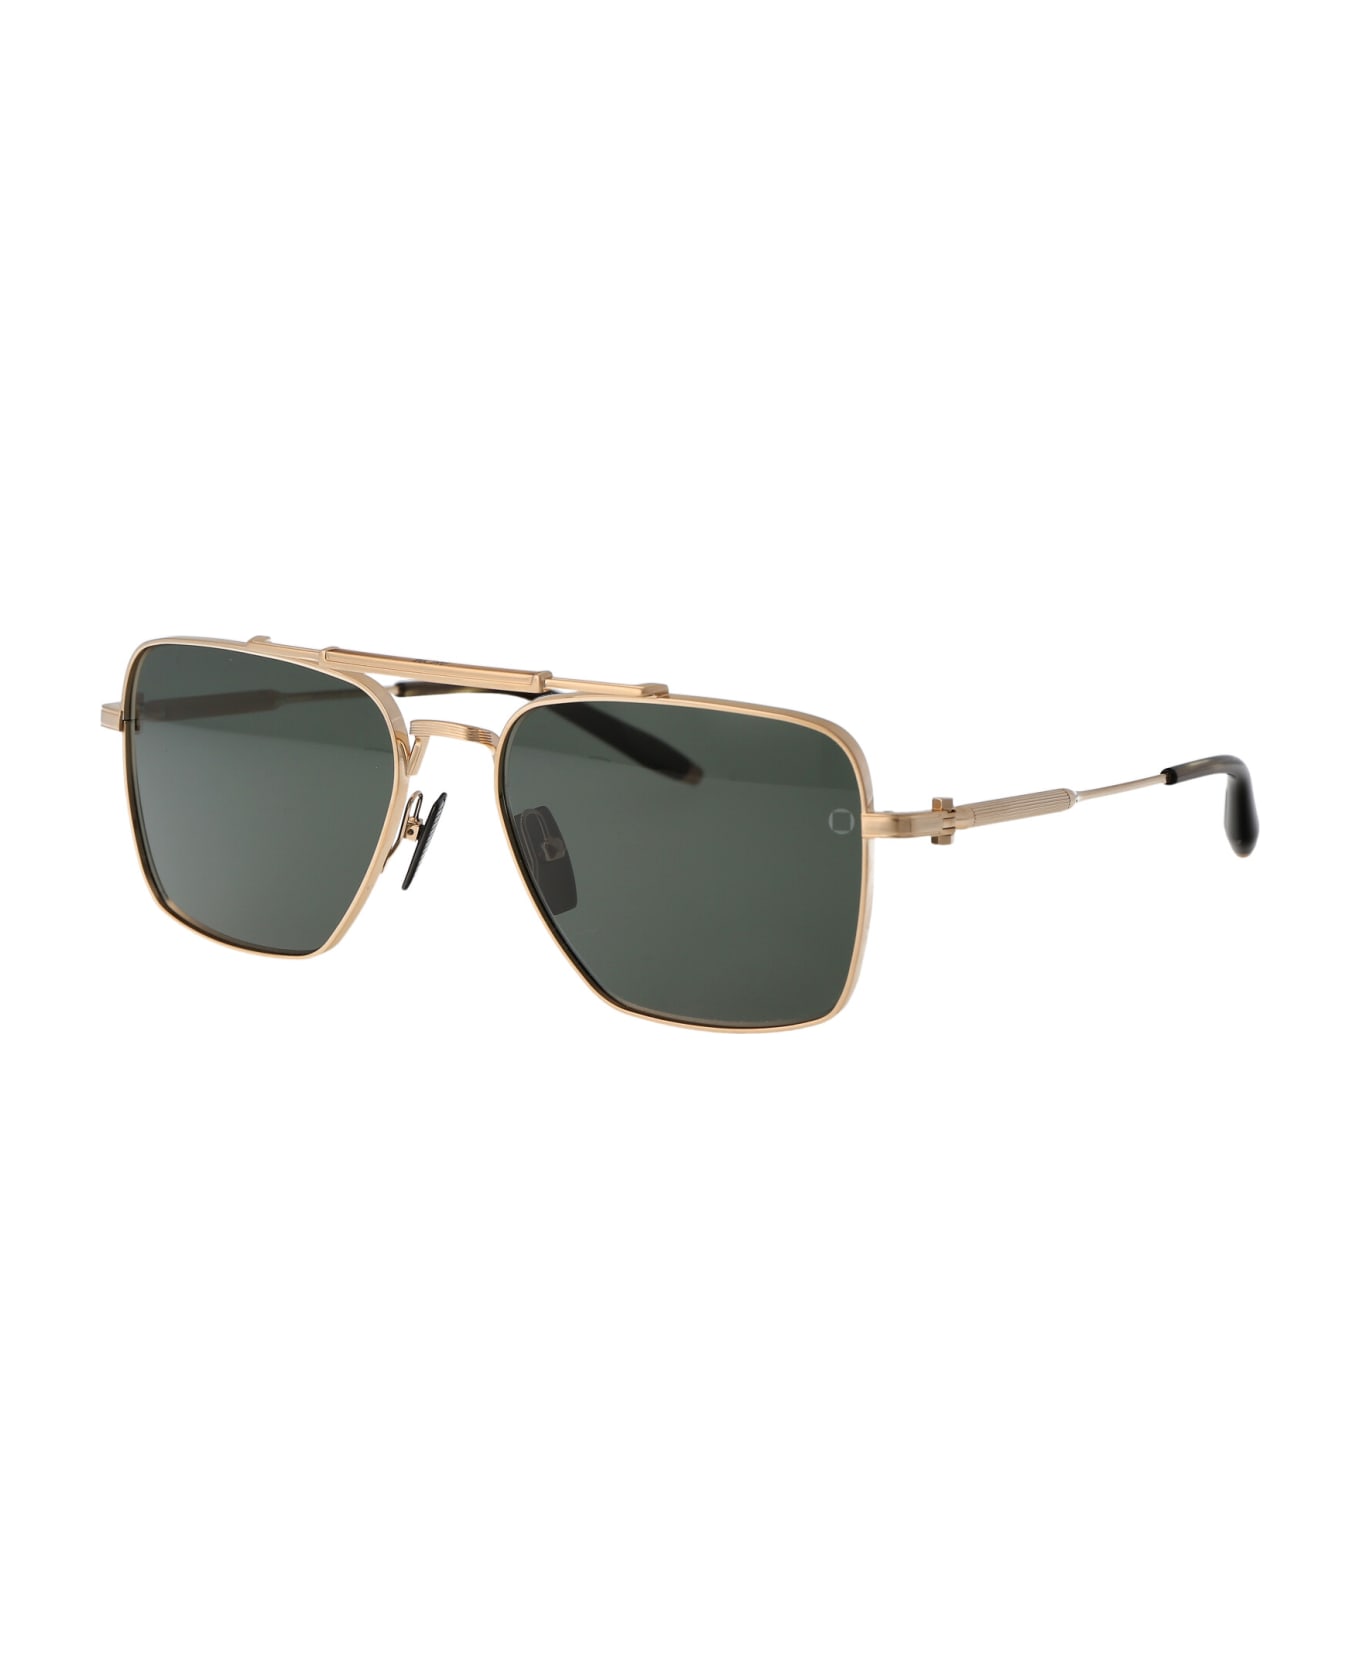 Akoni Eos Sunglasses - sunglasses from LA-based eyewear label